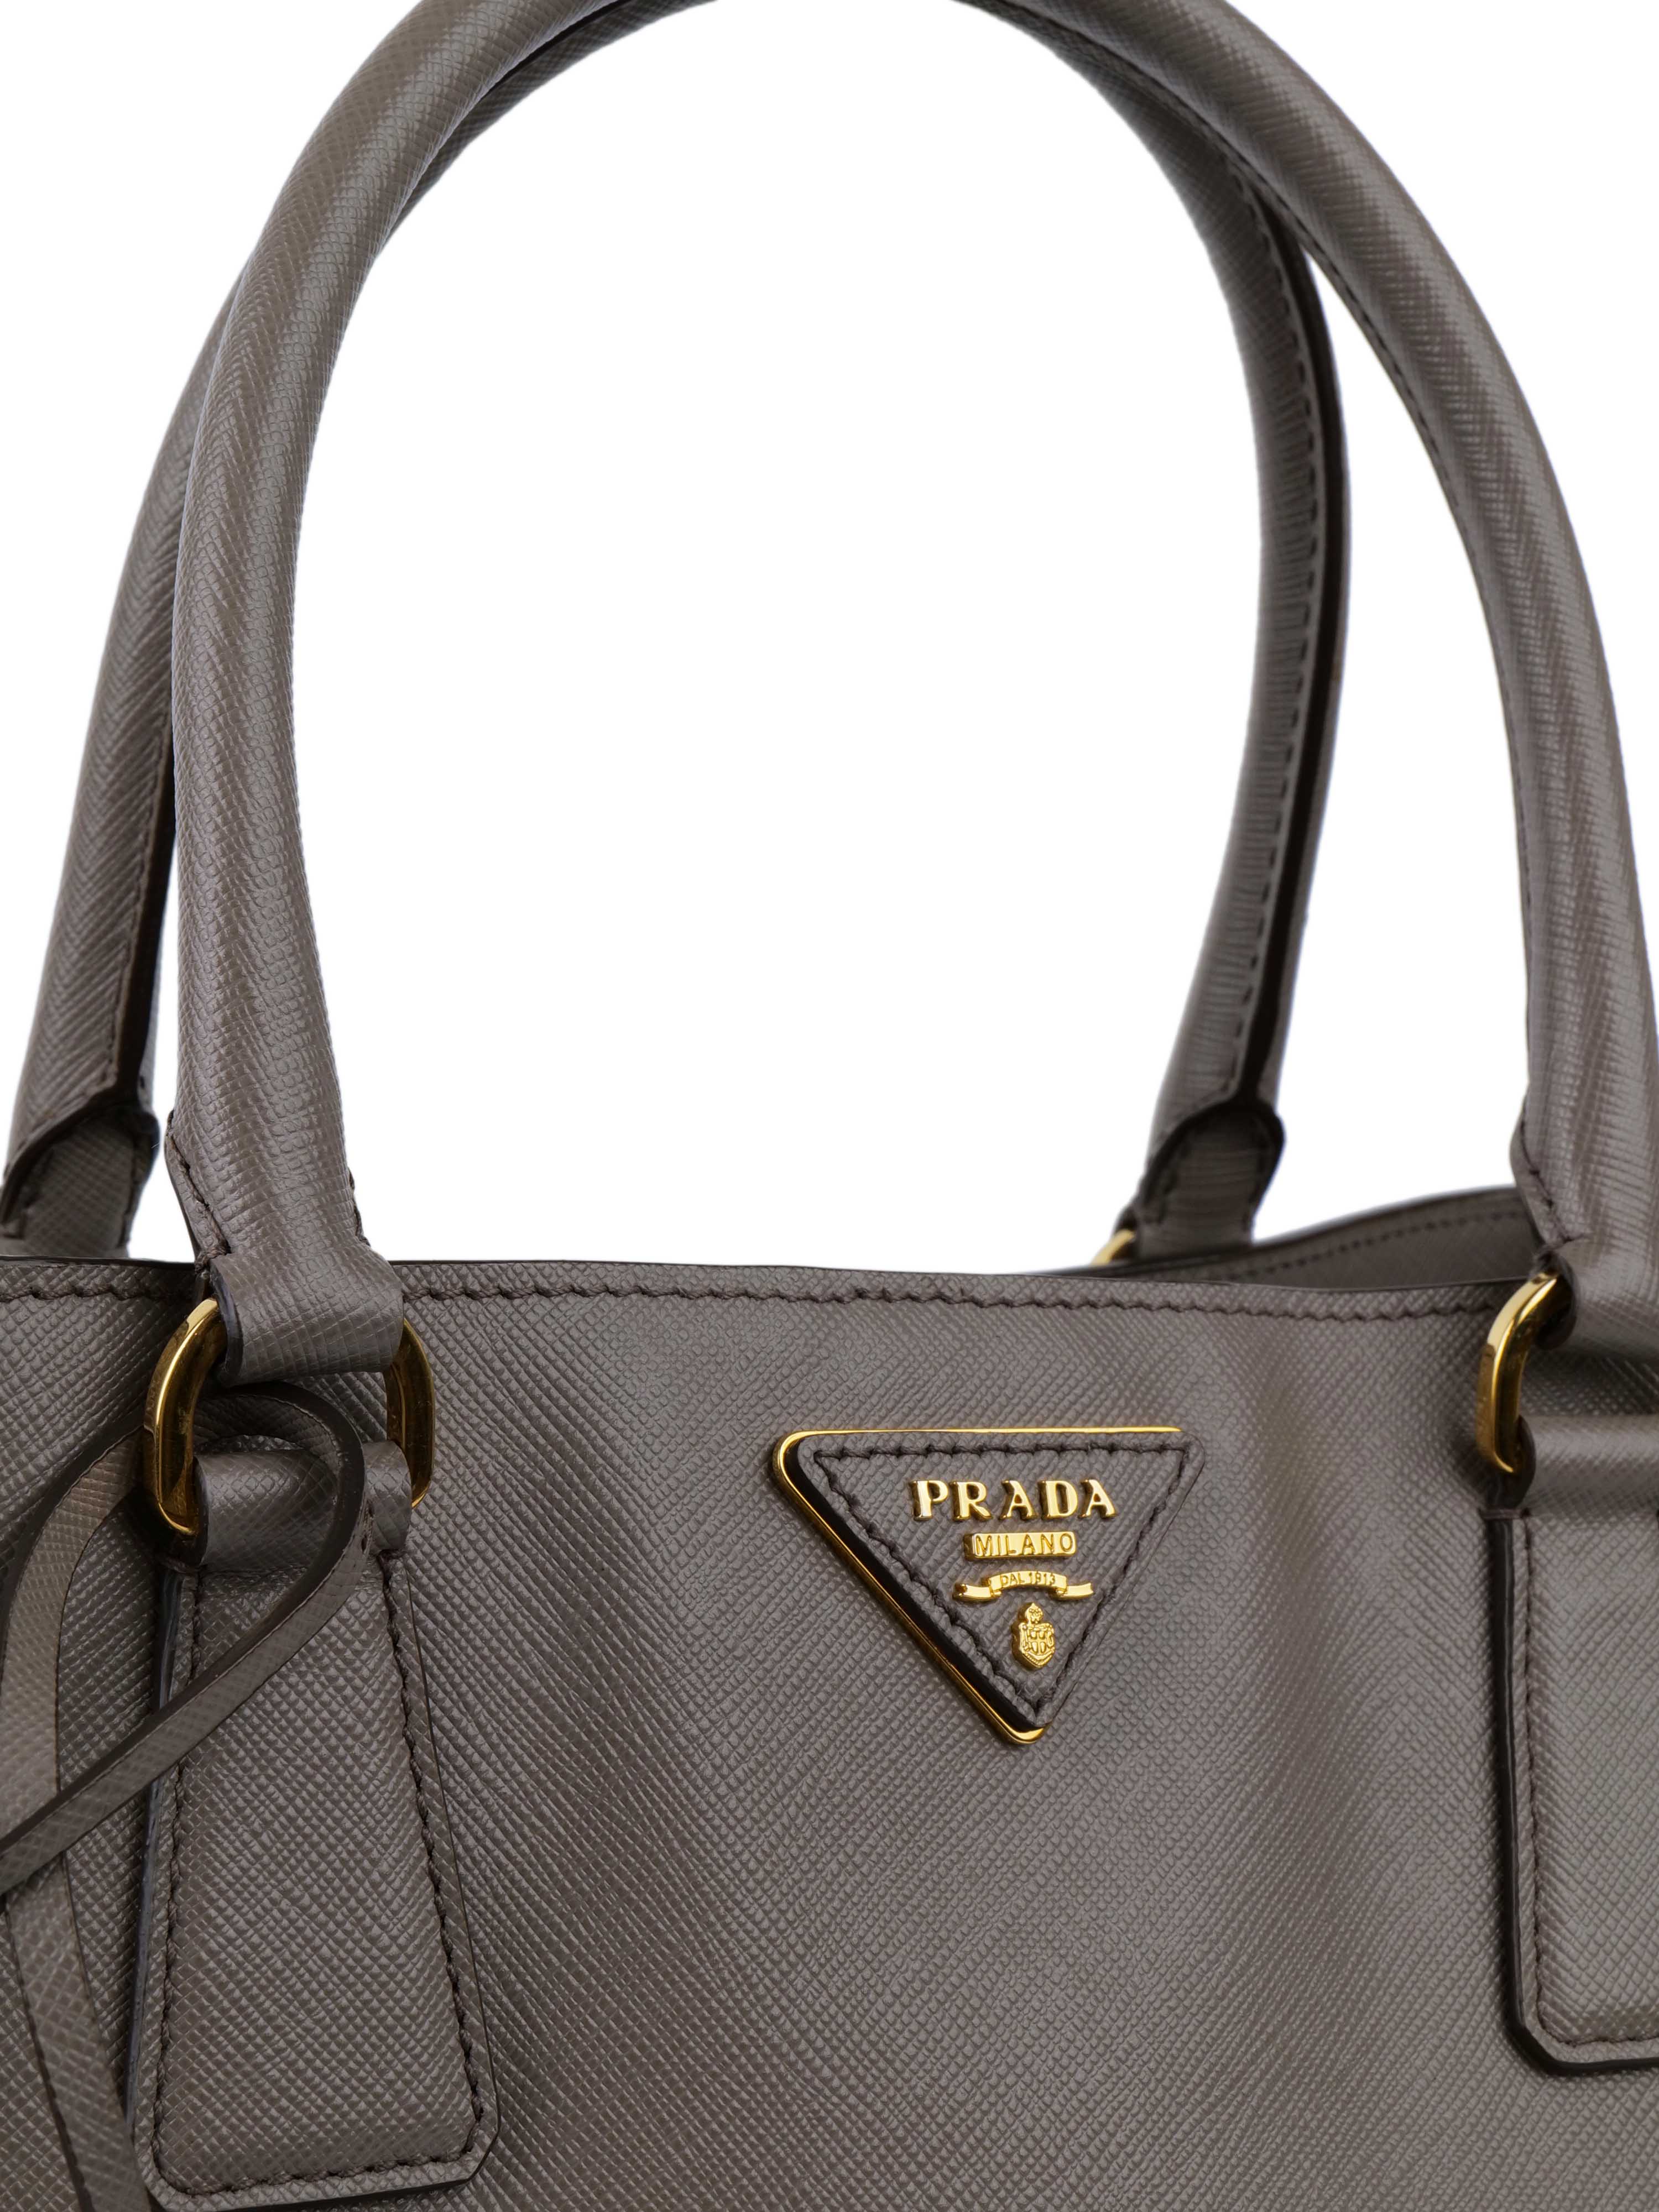 Prada Saffiano Dark Grey Galleria Tote Bag.